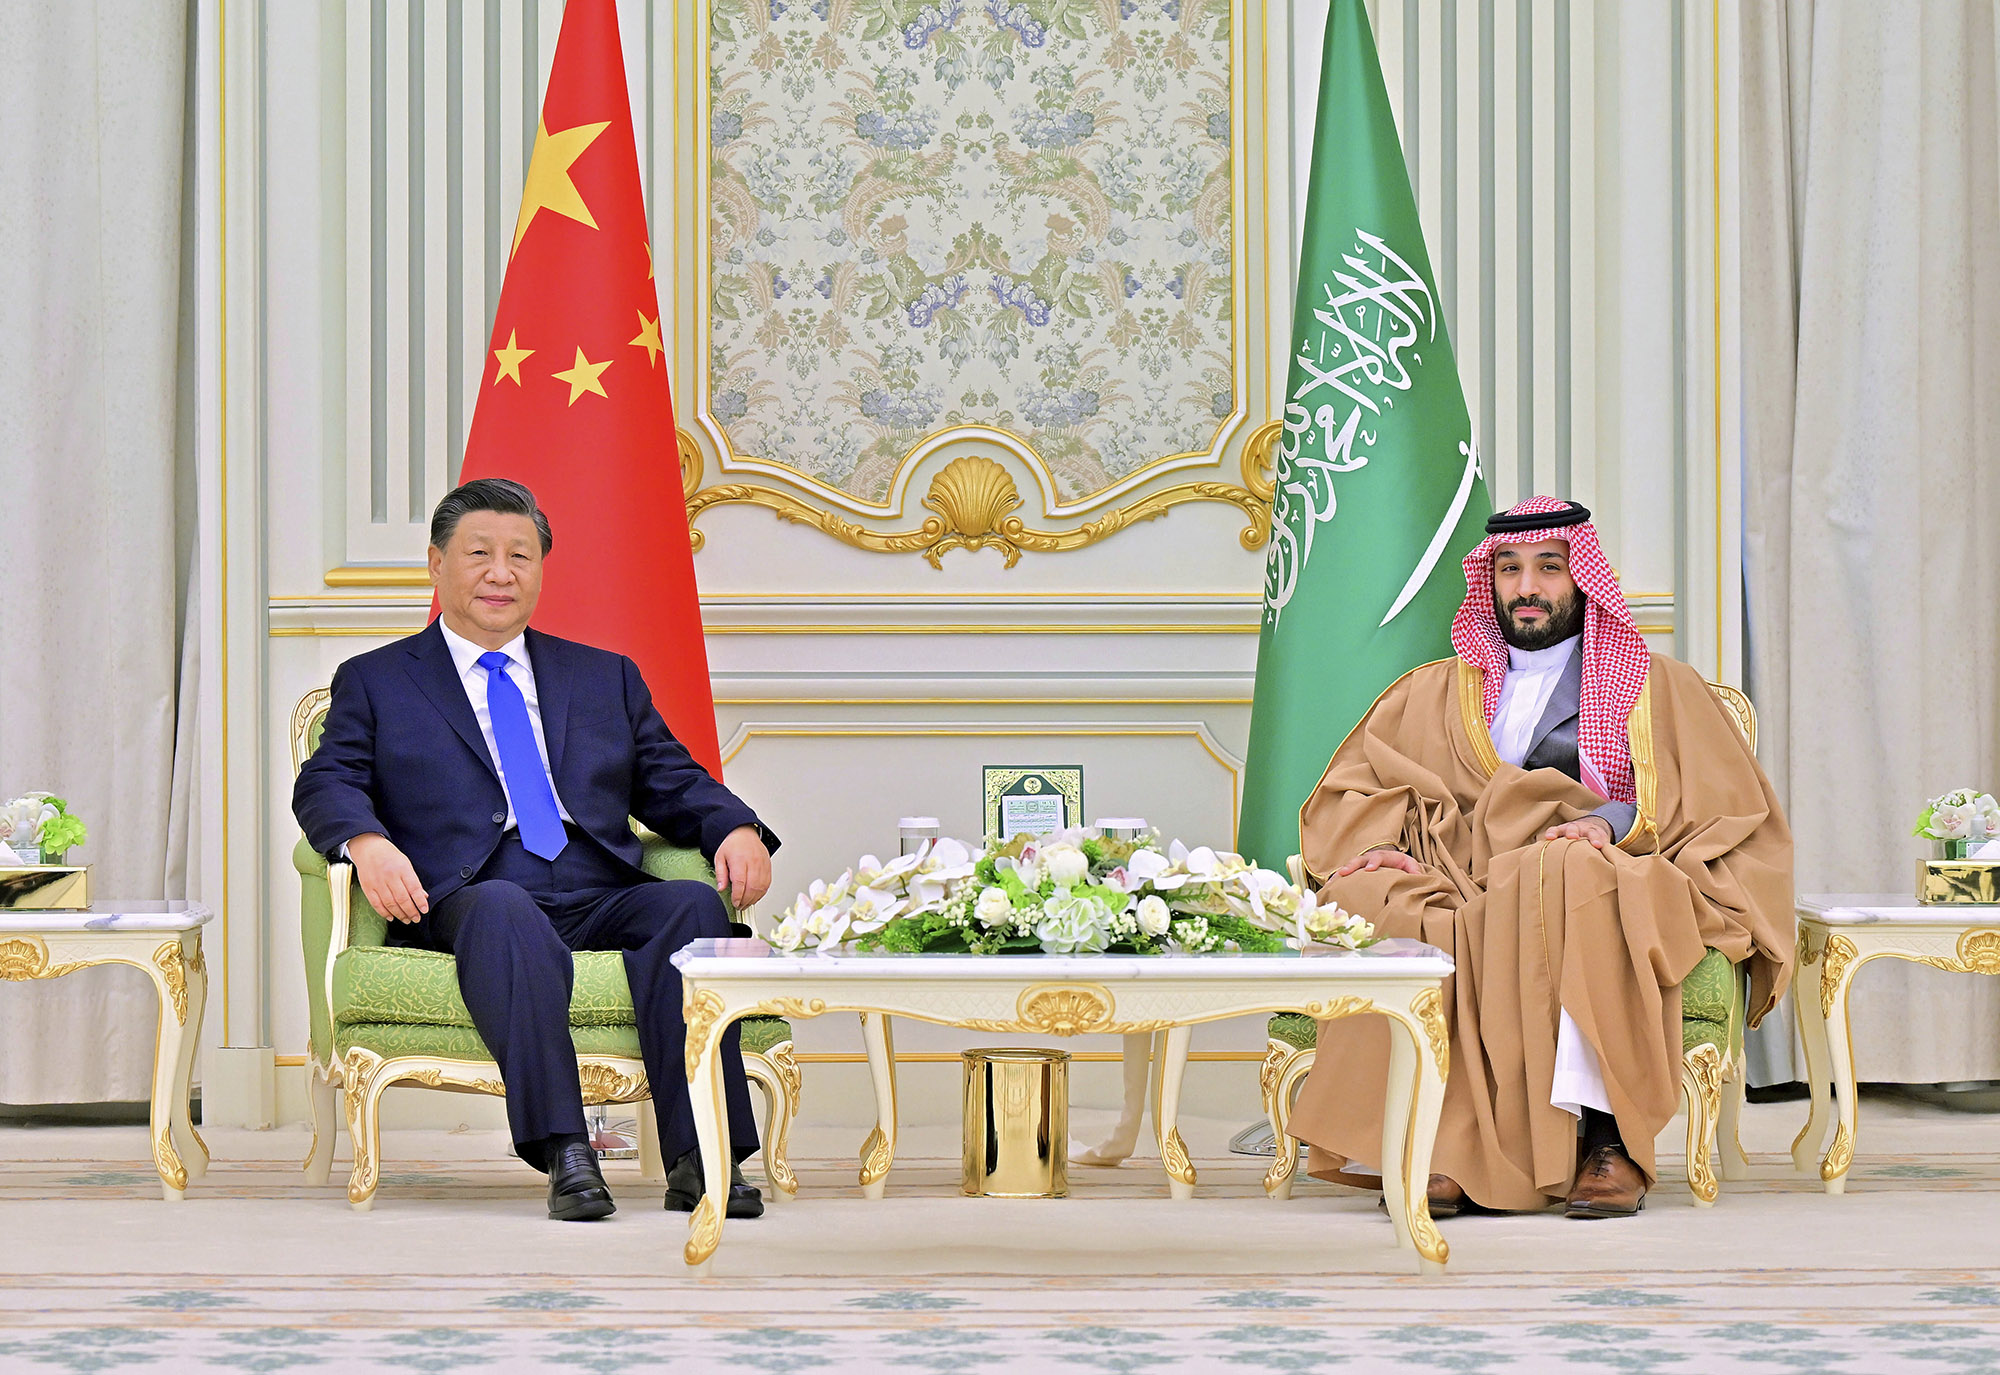 Xi Jinping meets and Crown Prince Mohammed bin Salman at the royal palace in Riyadh,&nbsp;Dec. 8.